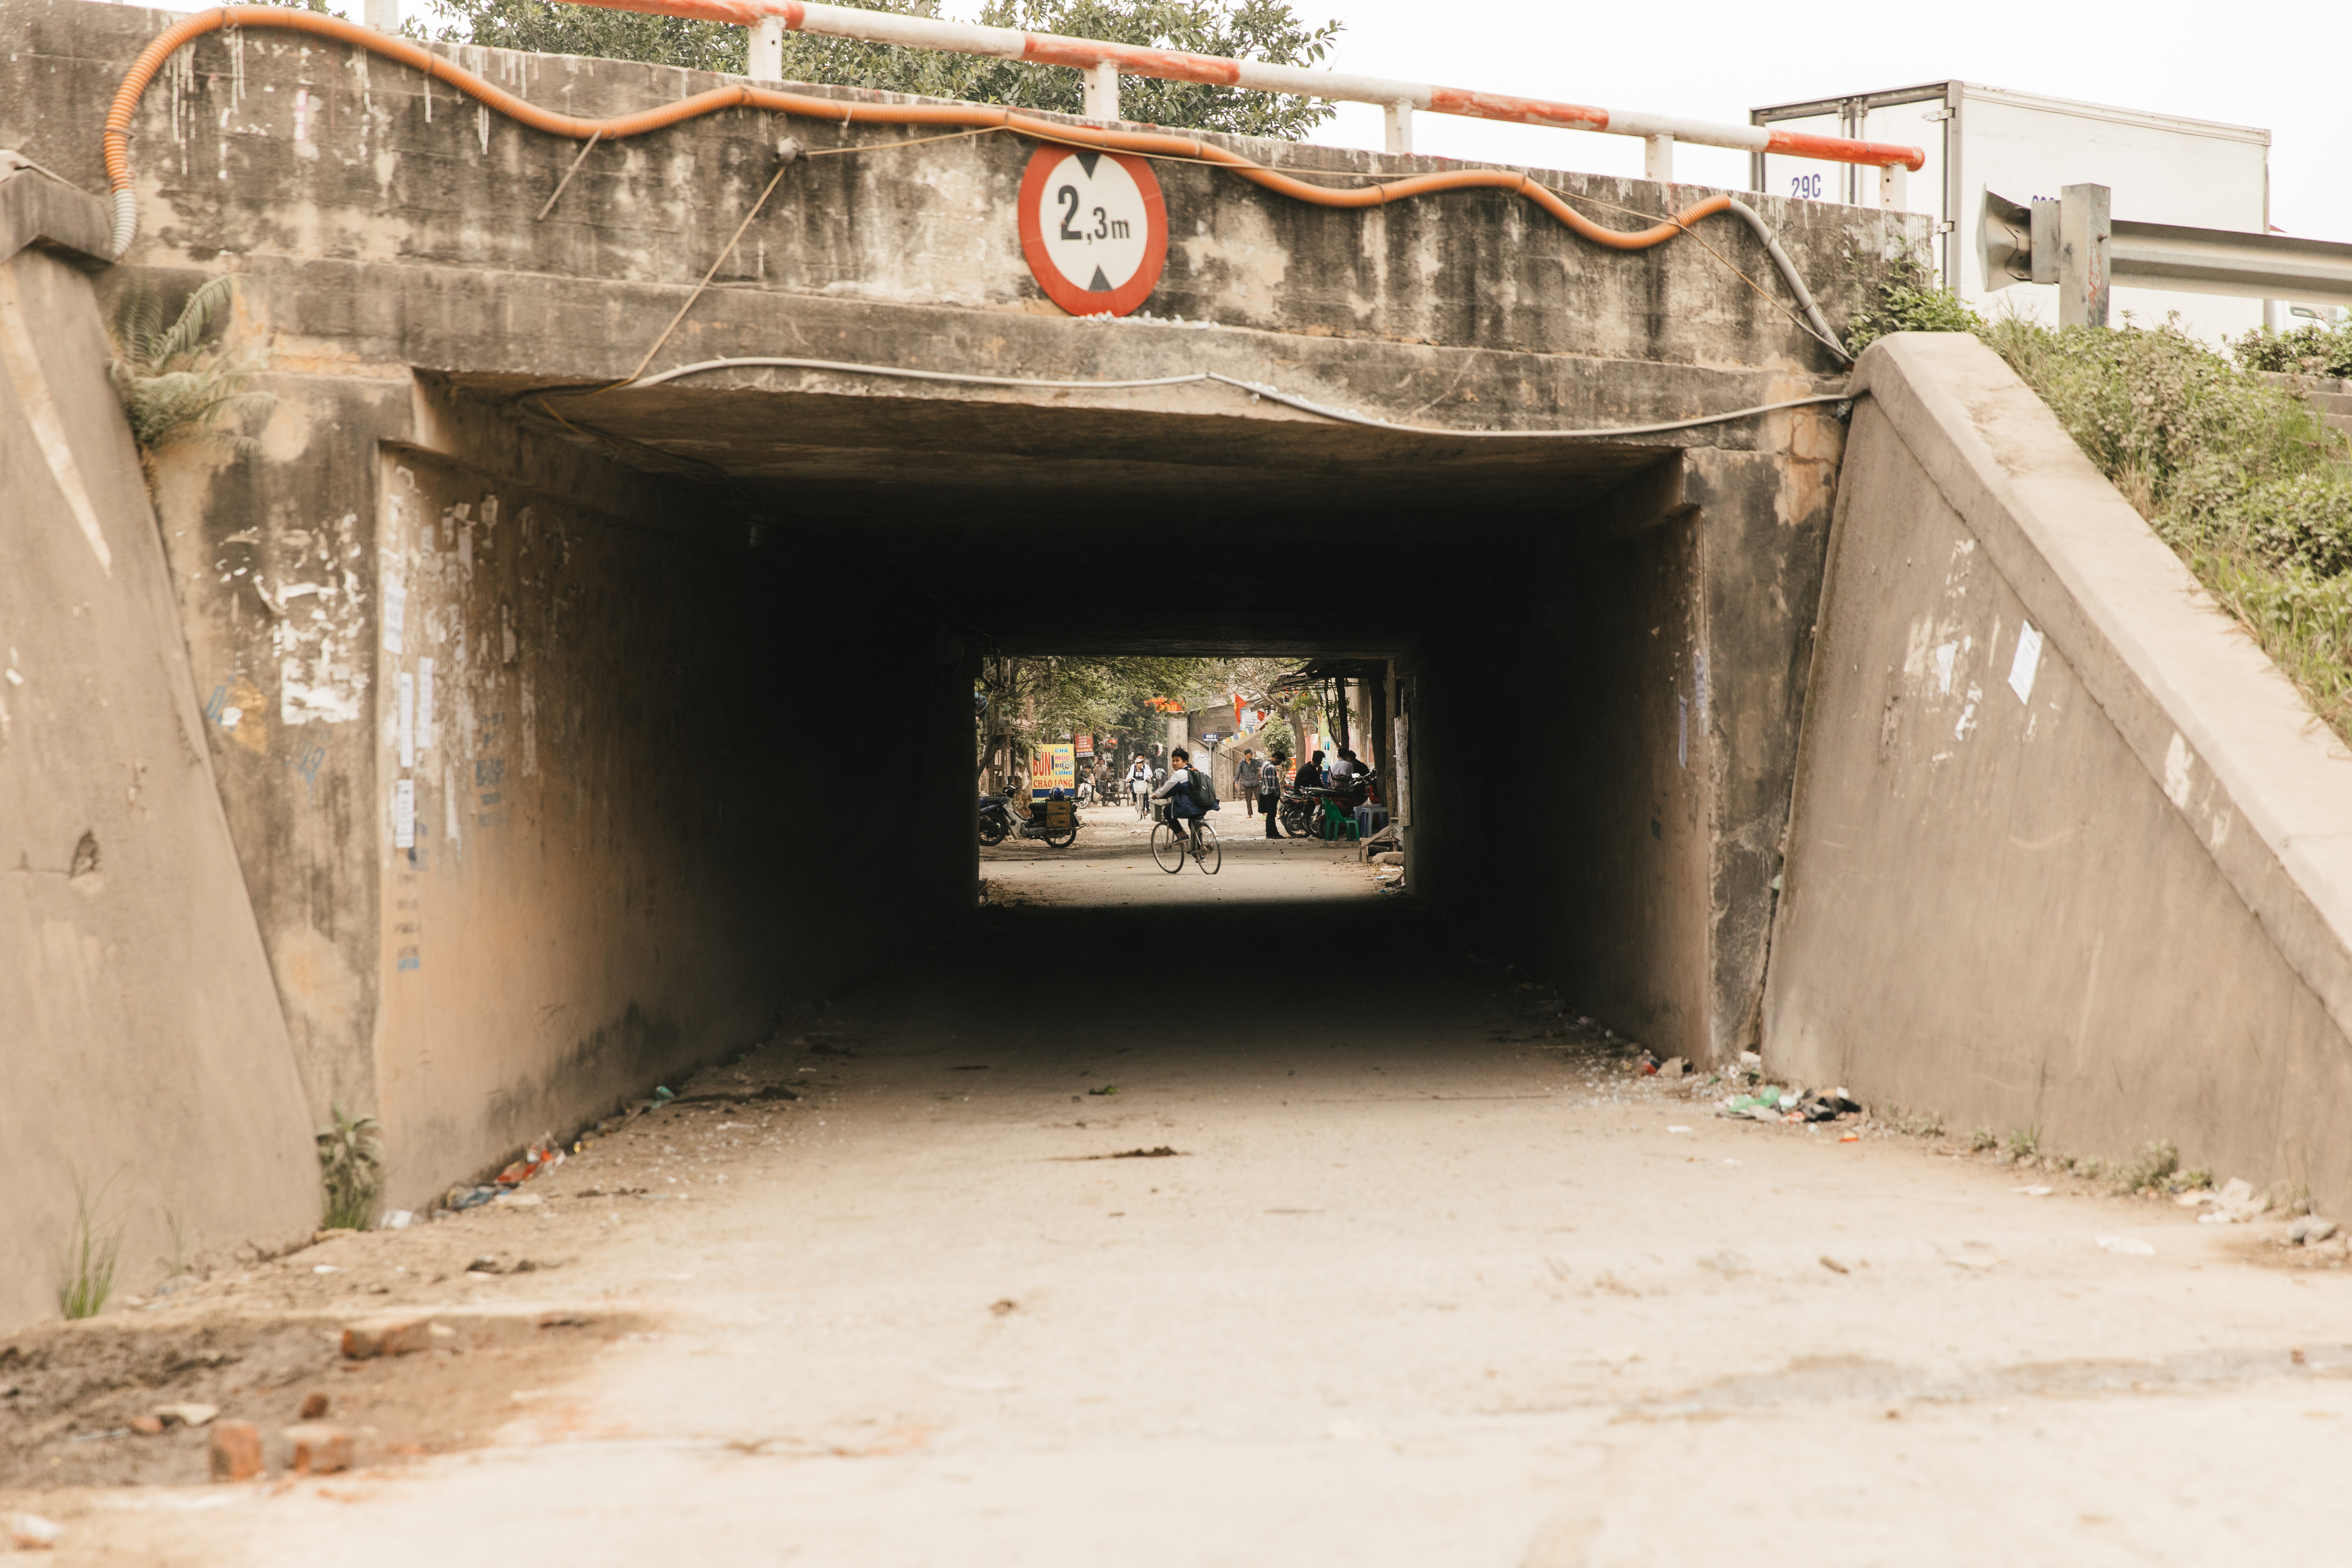 The underpass in Hanoi